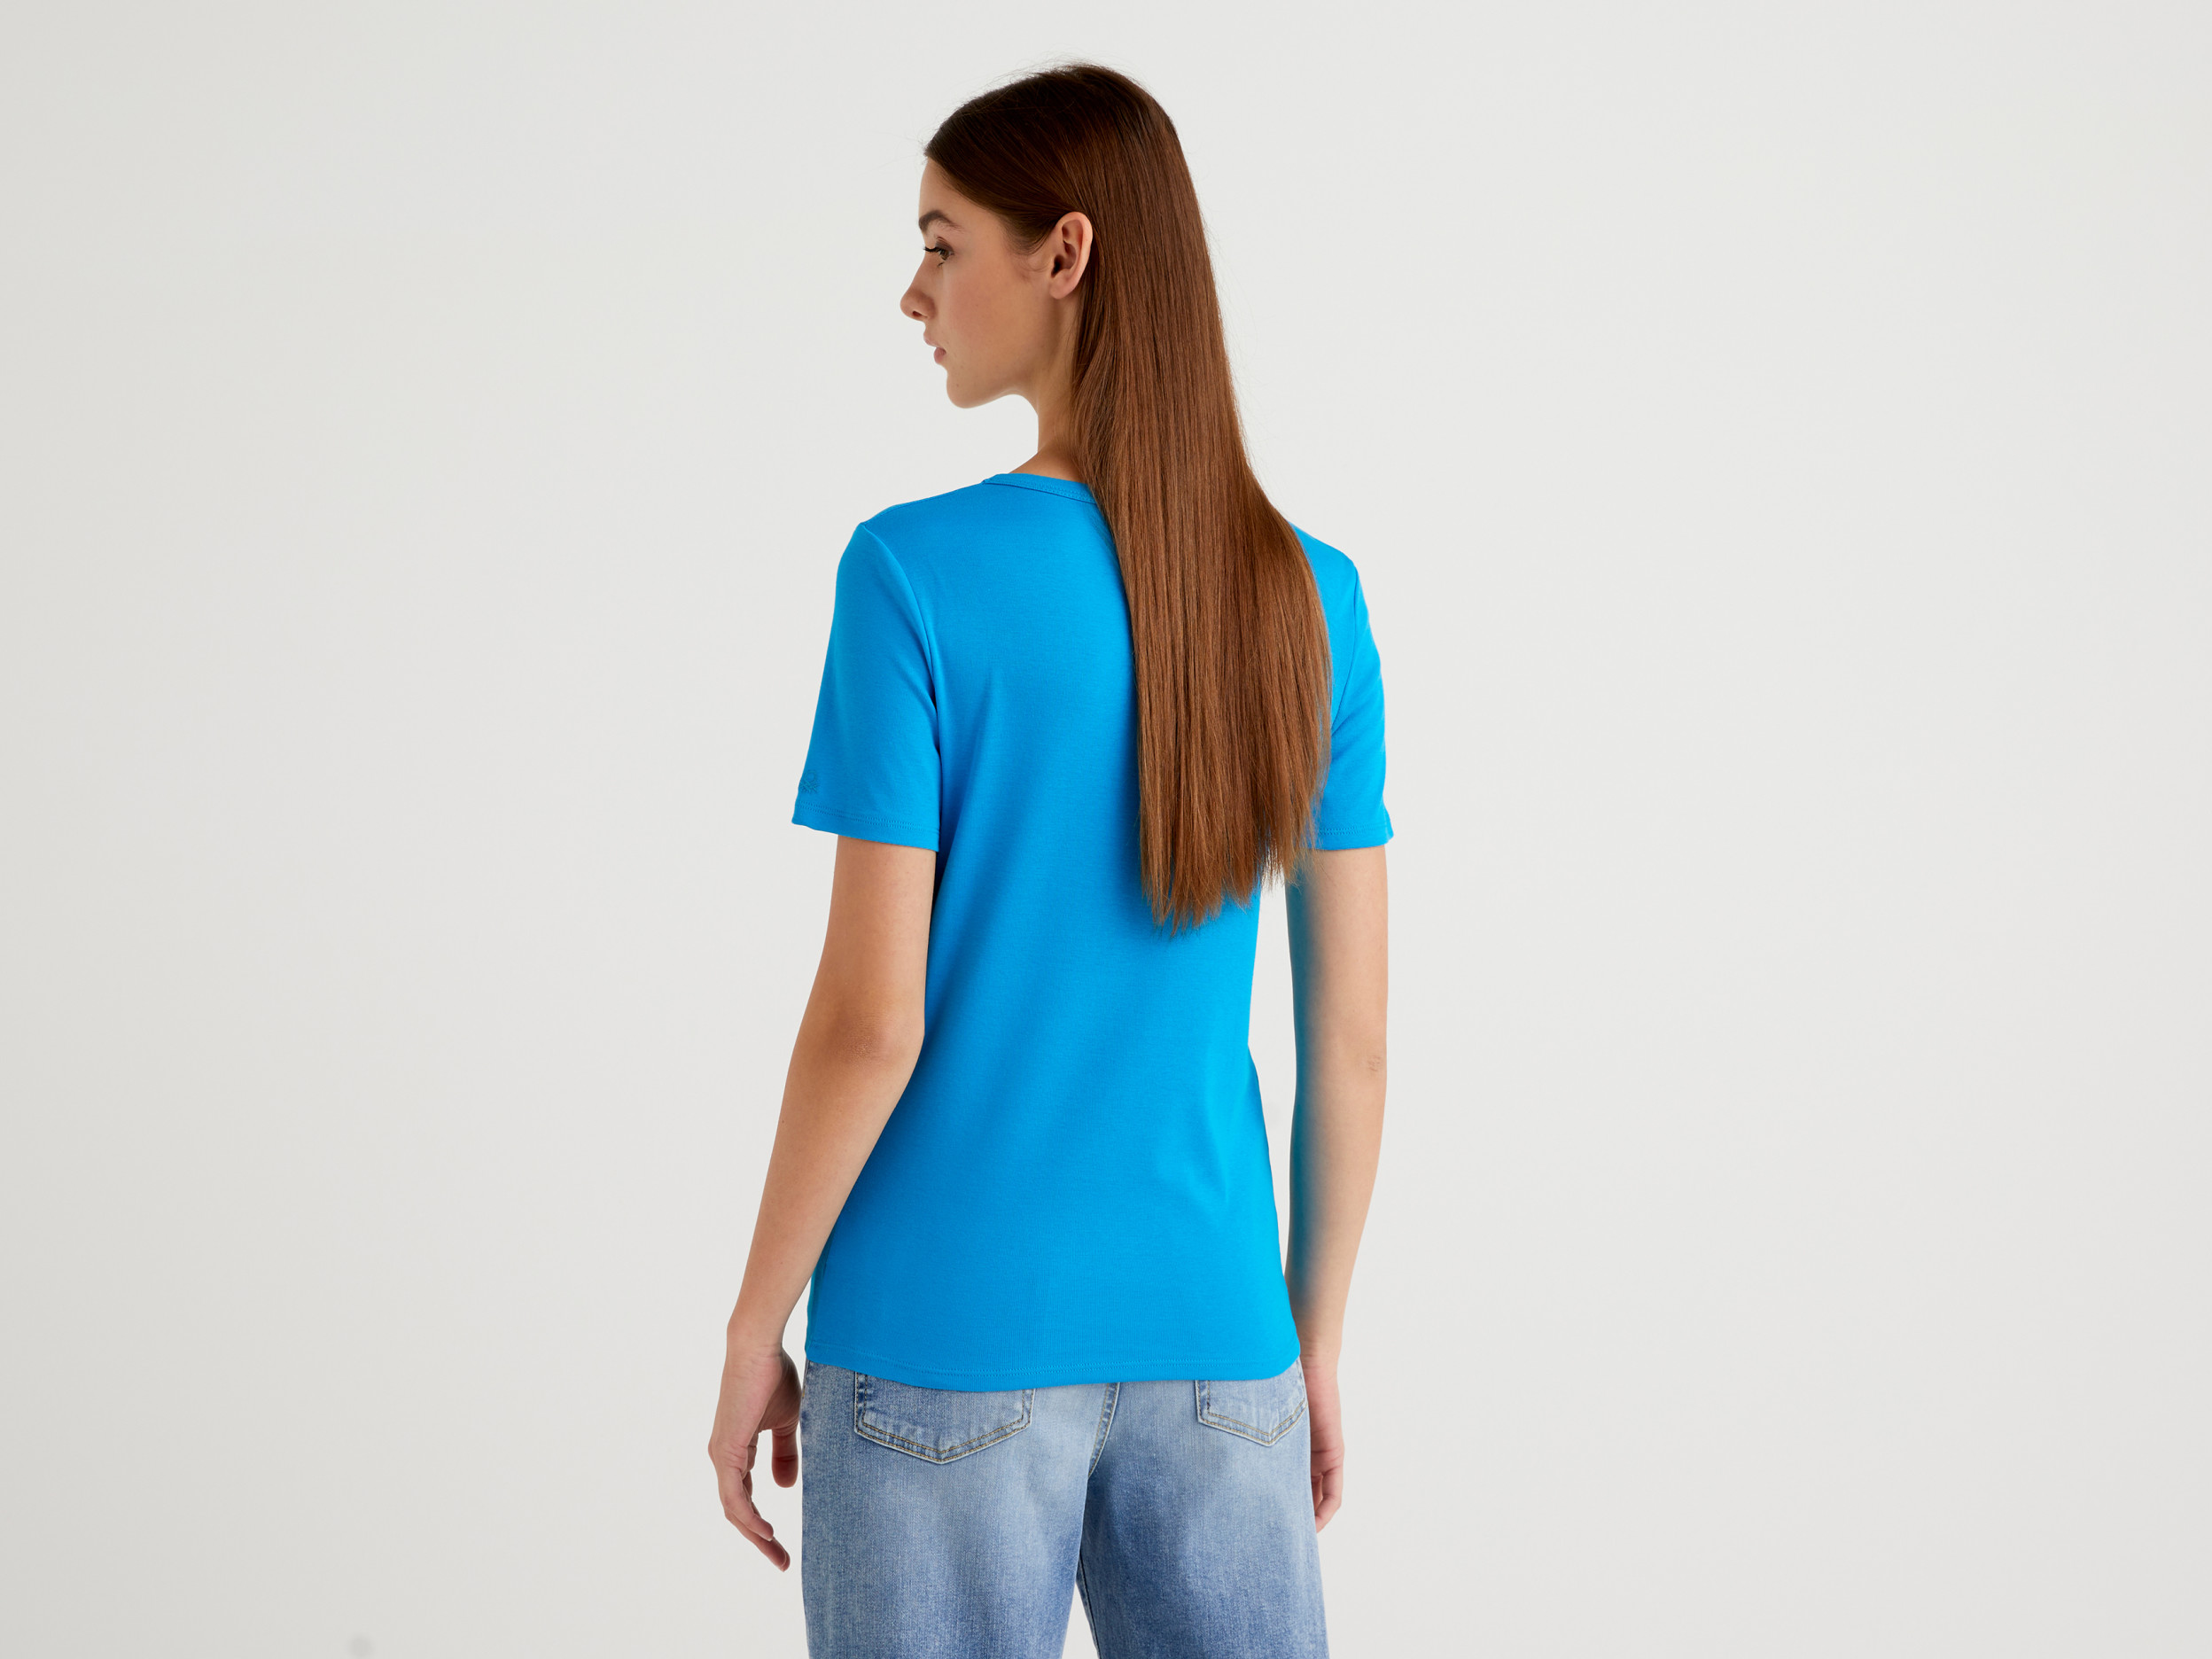 Benetton, Long Fiber Cotton T-Shirt, Taglia L, Turquoise, Women